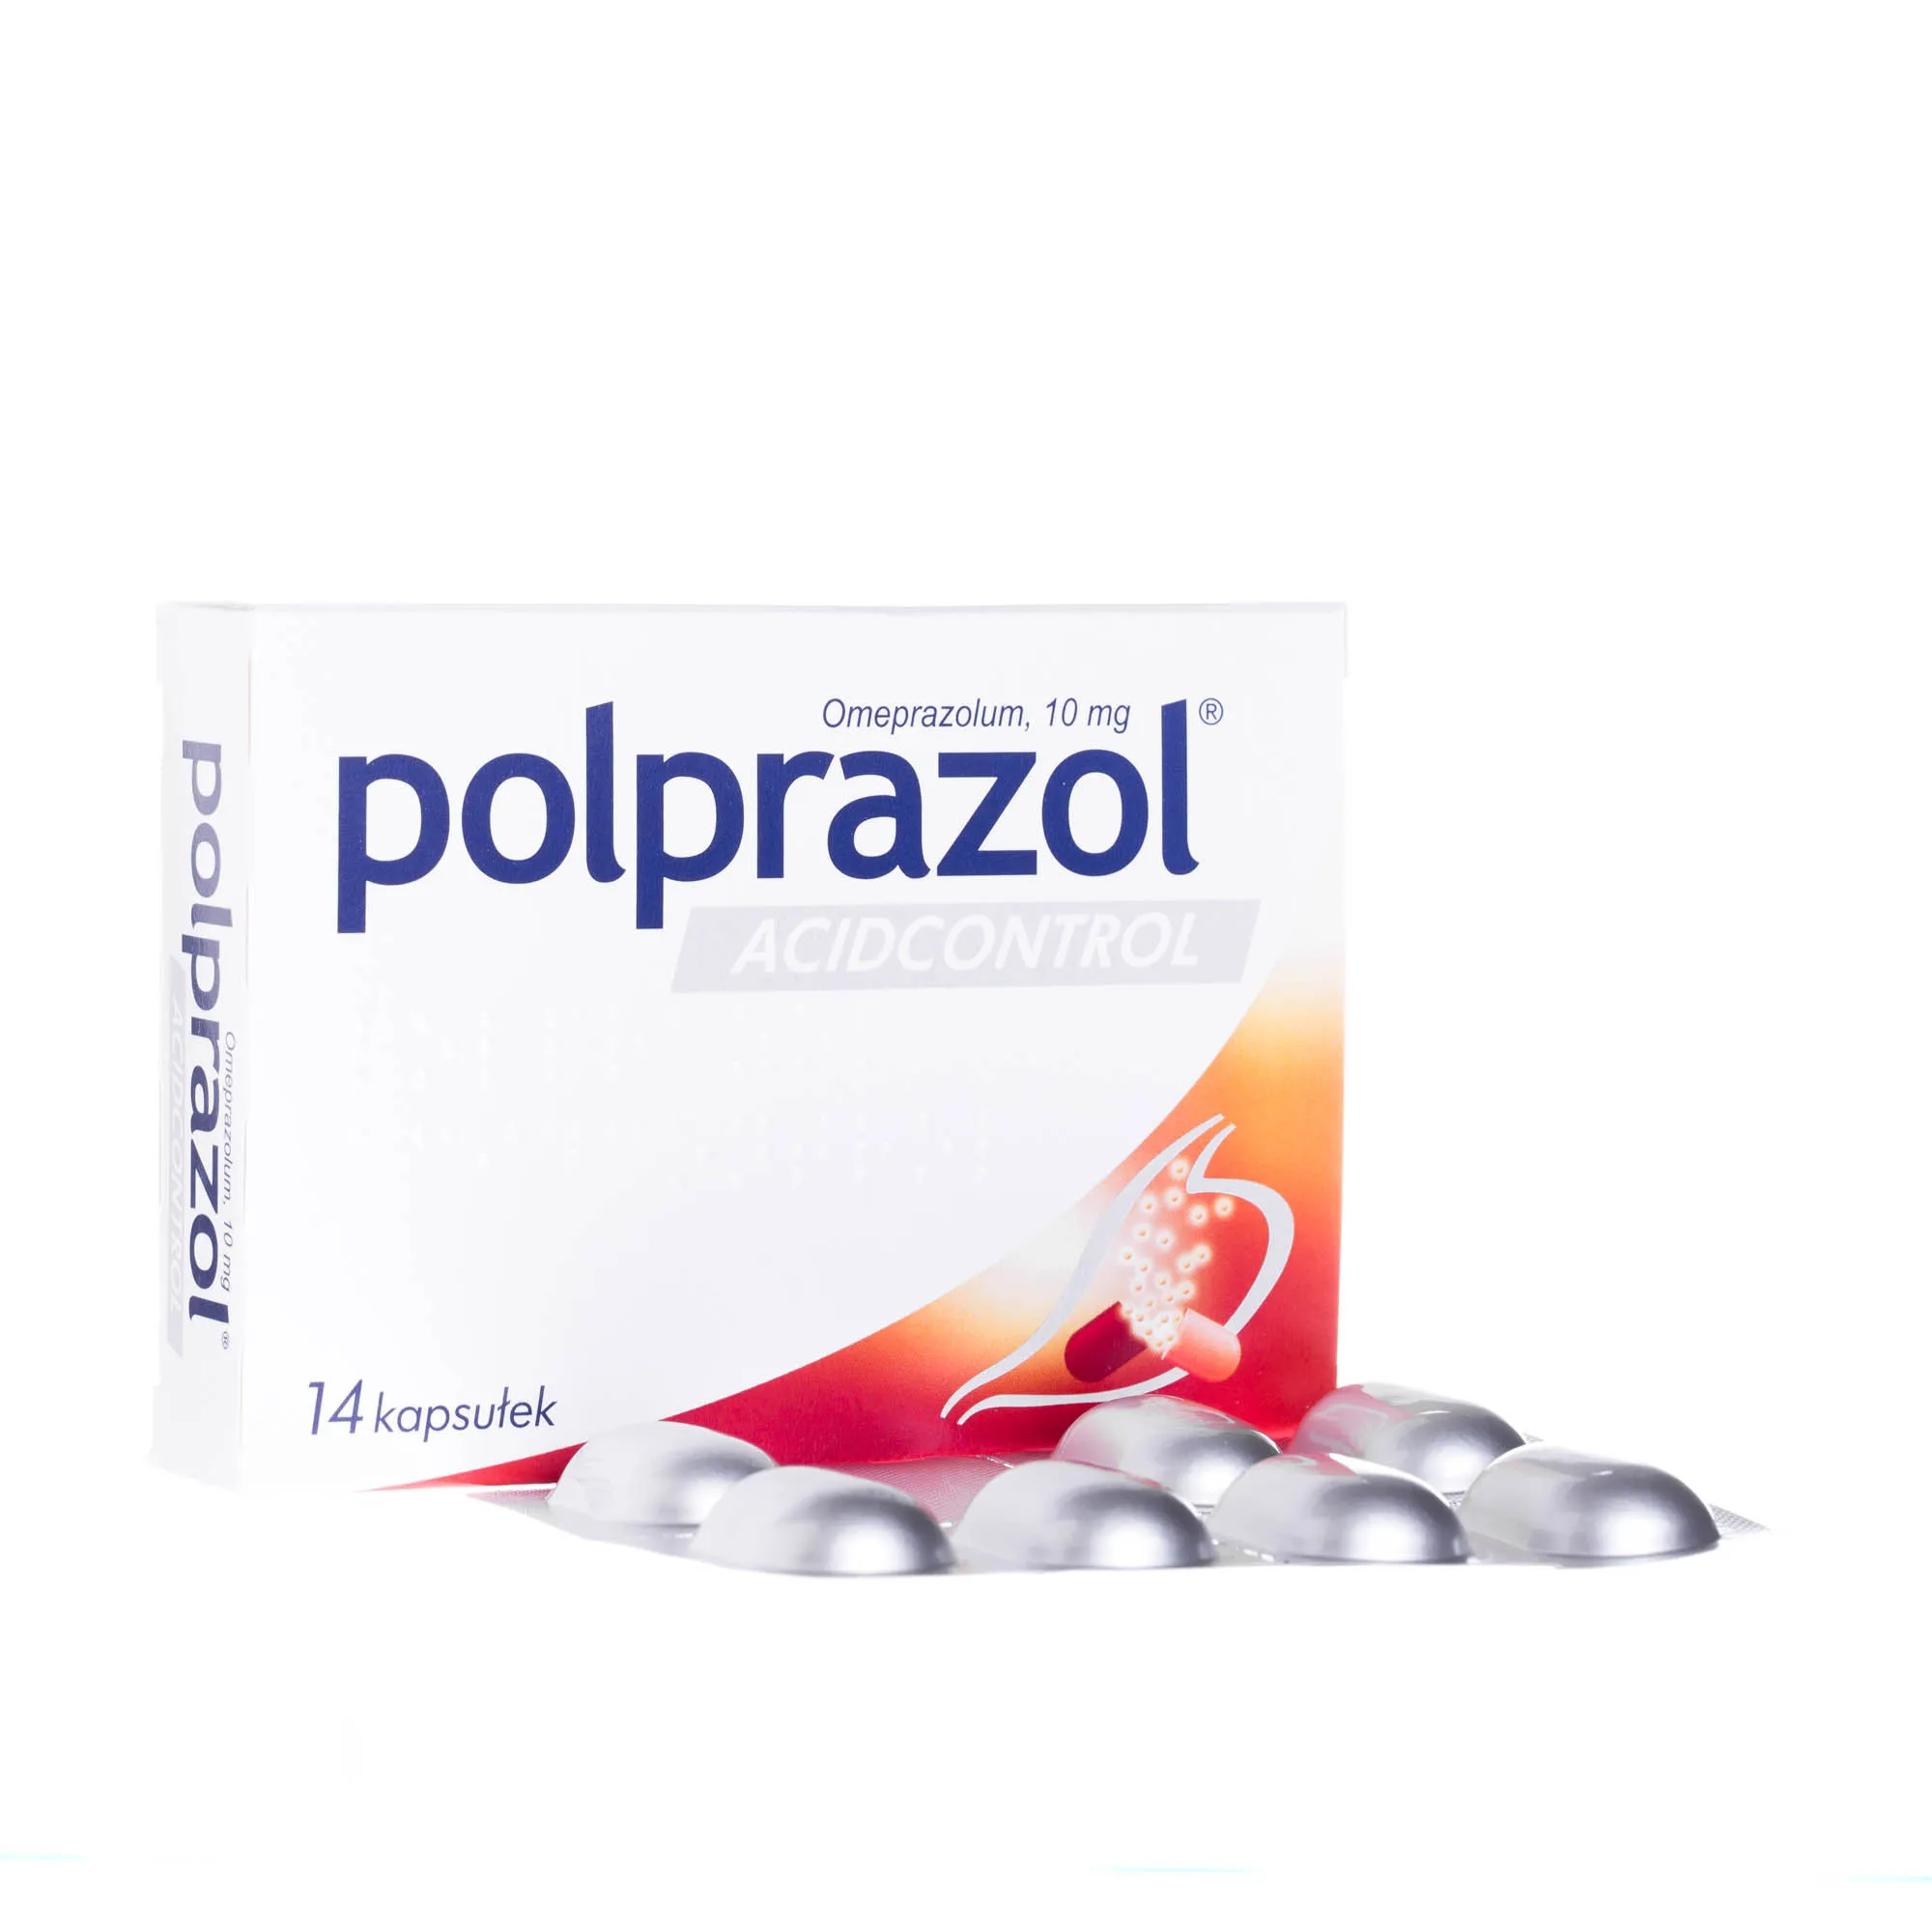 Polprazol Acidcontrol 10 mg - 14 kapsułek